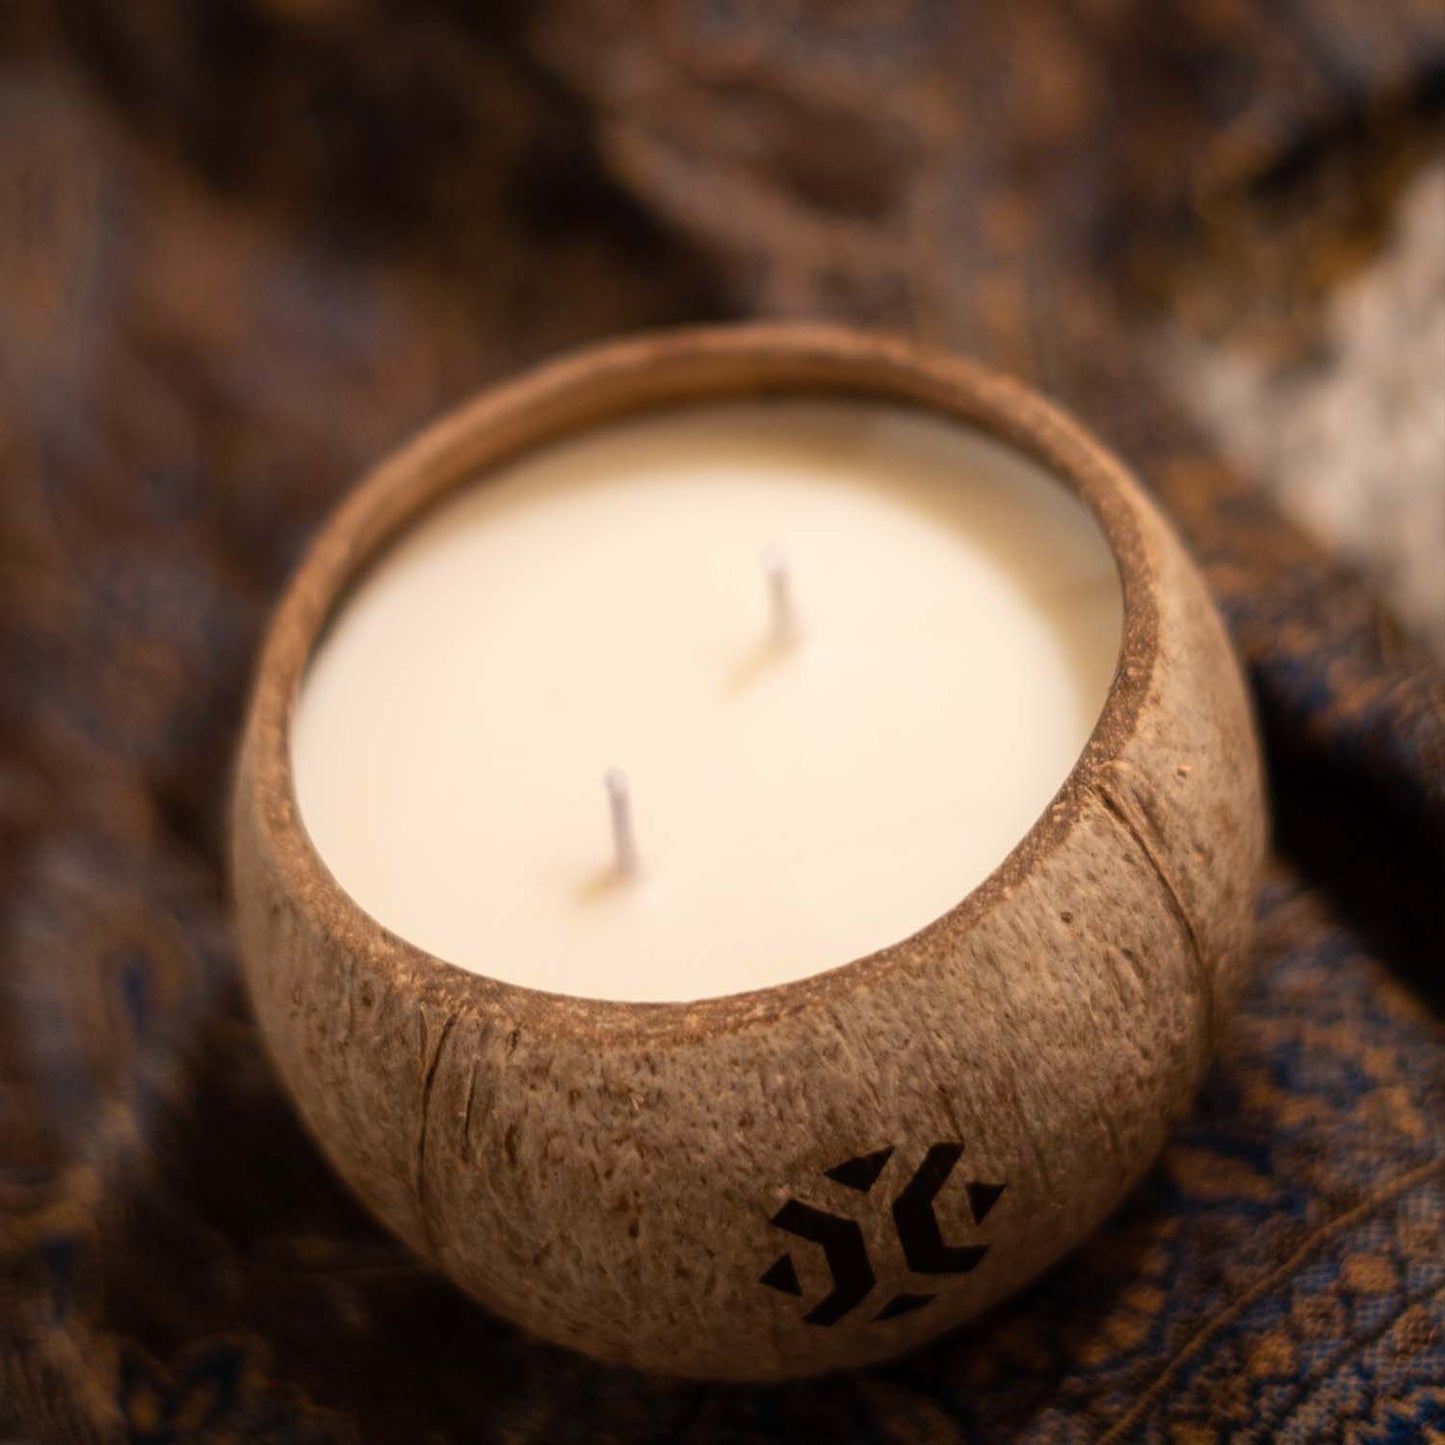 Koko - Upcycled Coconut Shell Candle